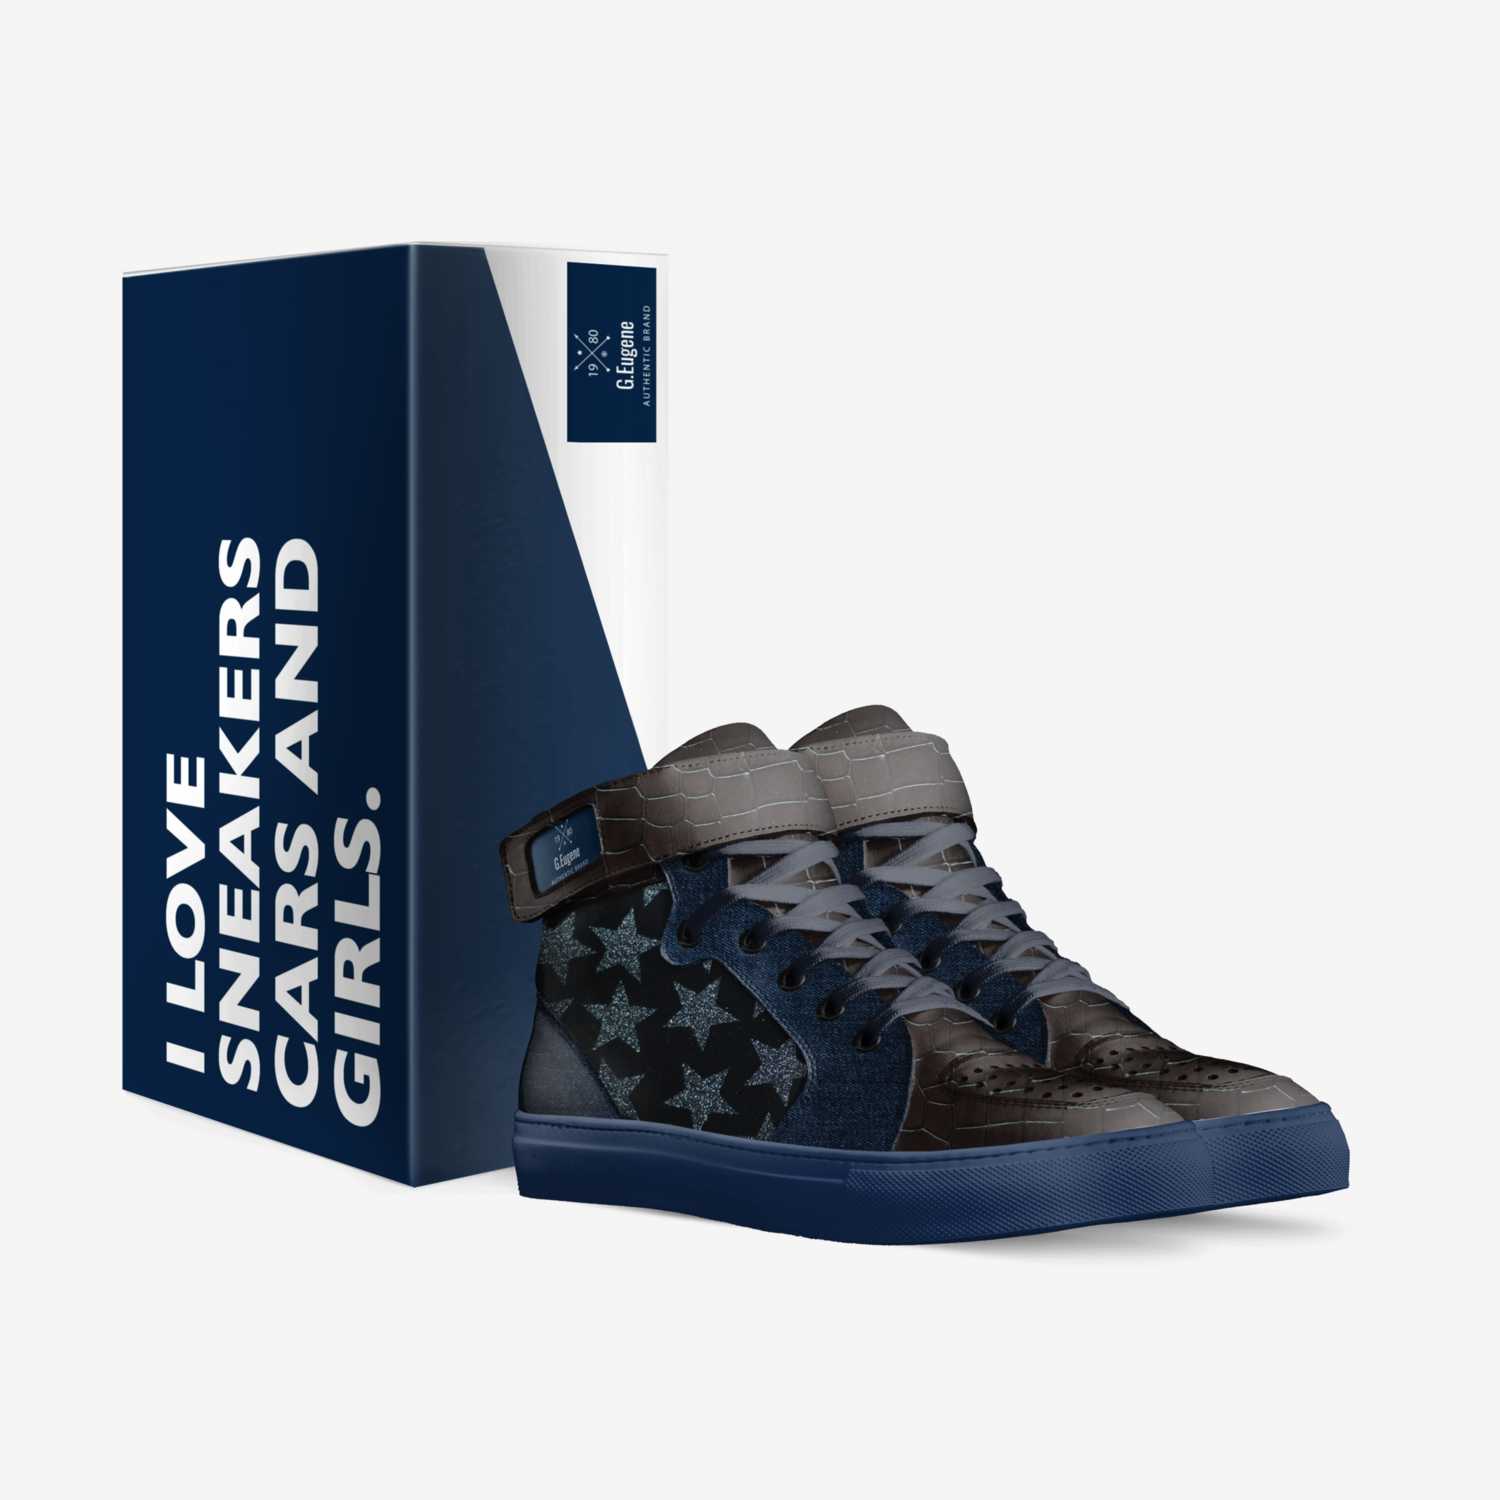 G MACK custom made in Italy shoes by Mervyn Riley | Box view